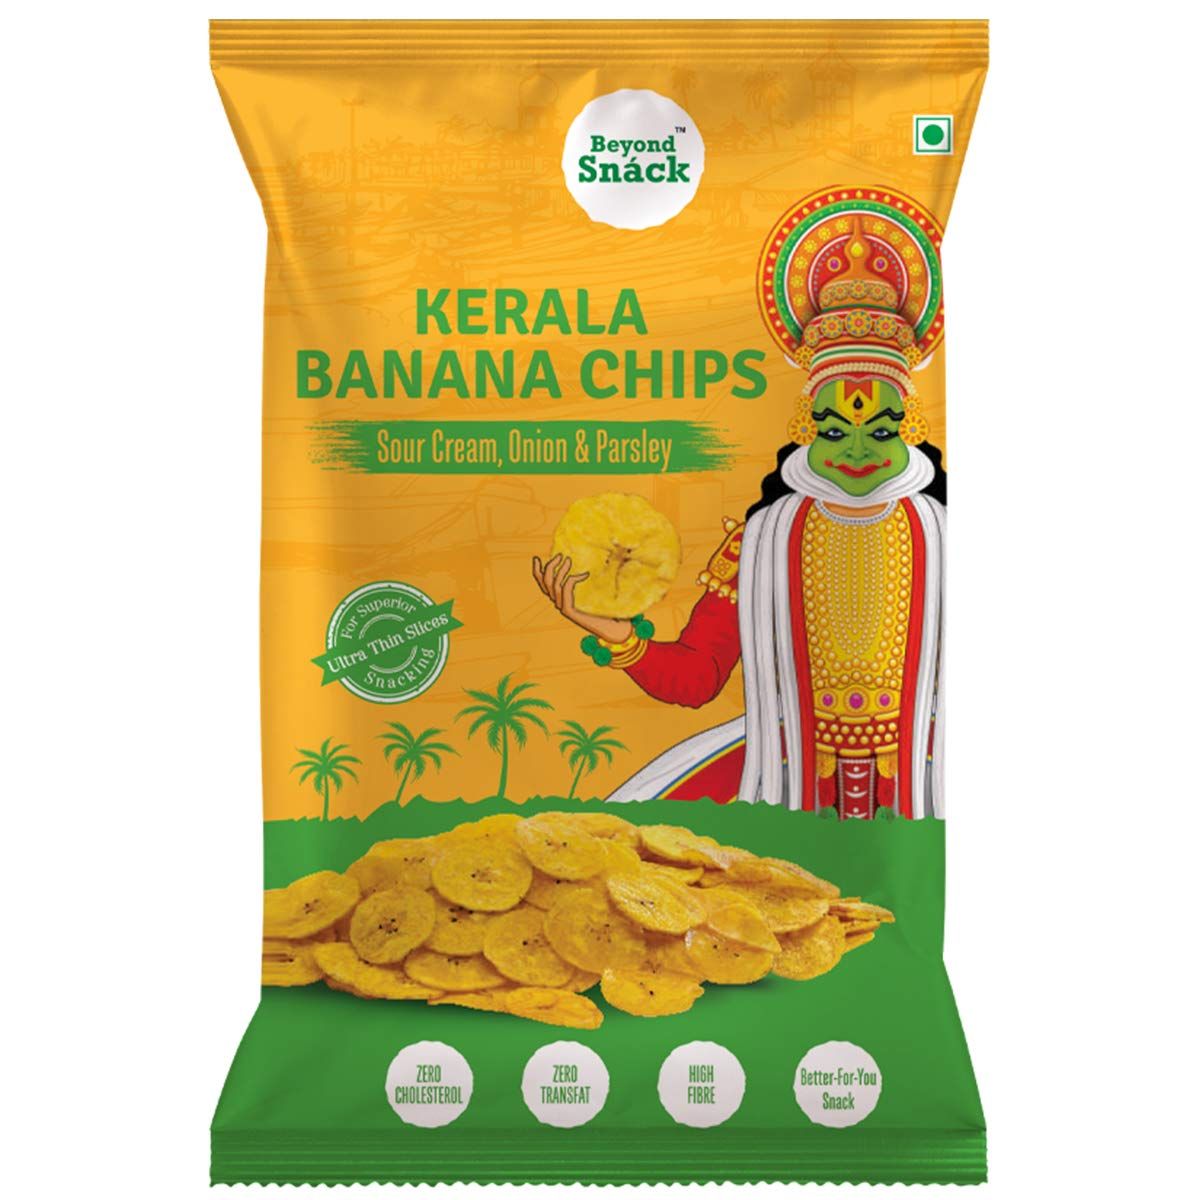 Beyond Snack Kerala Banana Chips Sour Cream Onion & Parsley Image